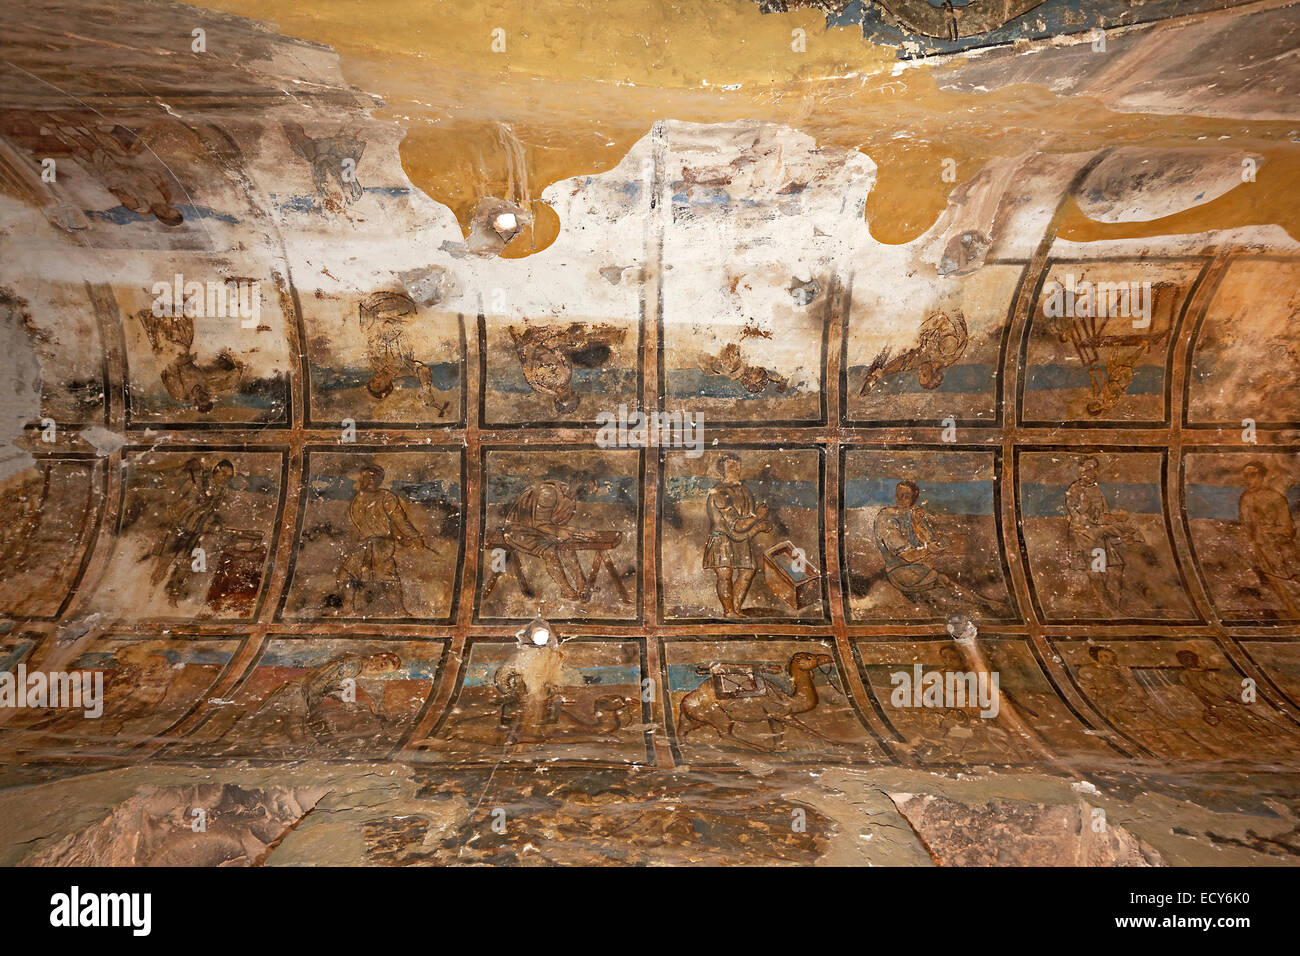 Frescoes, wall paintings, bathhouse, desert castle Qasr Amra or Qusaie Amra, Red Palace, UNESCO World Heritage Site, Jordan Stock Photo